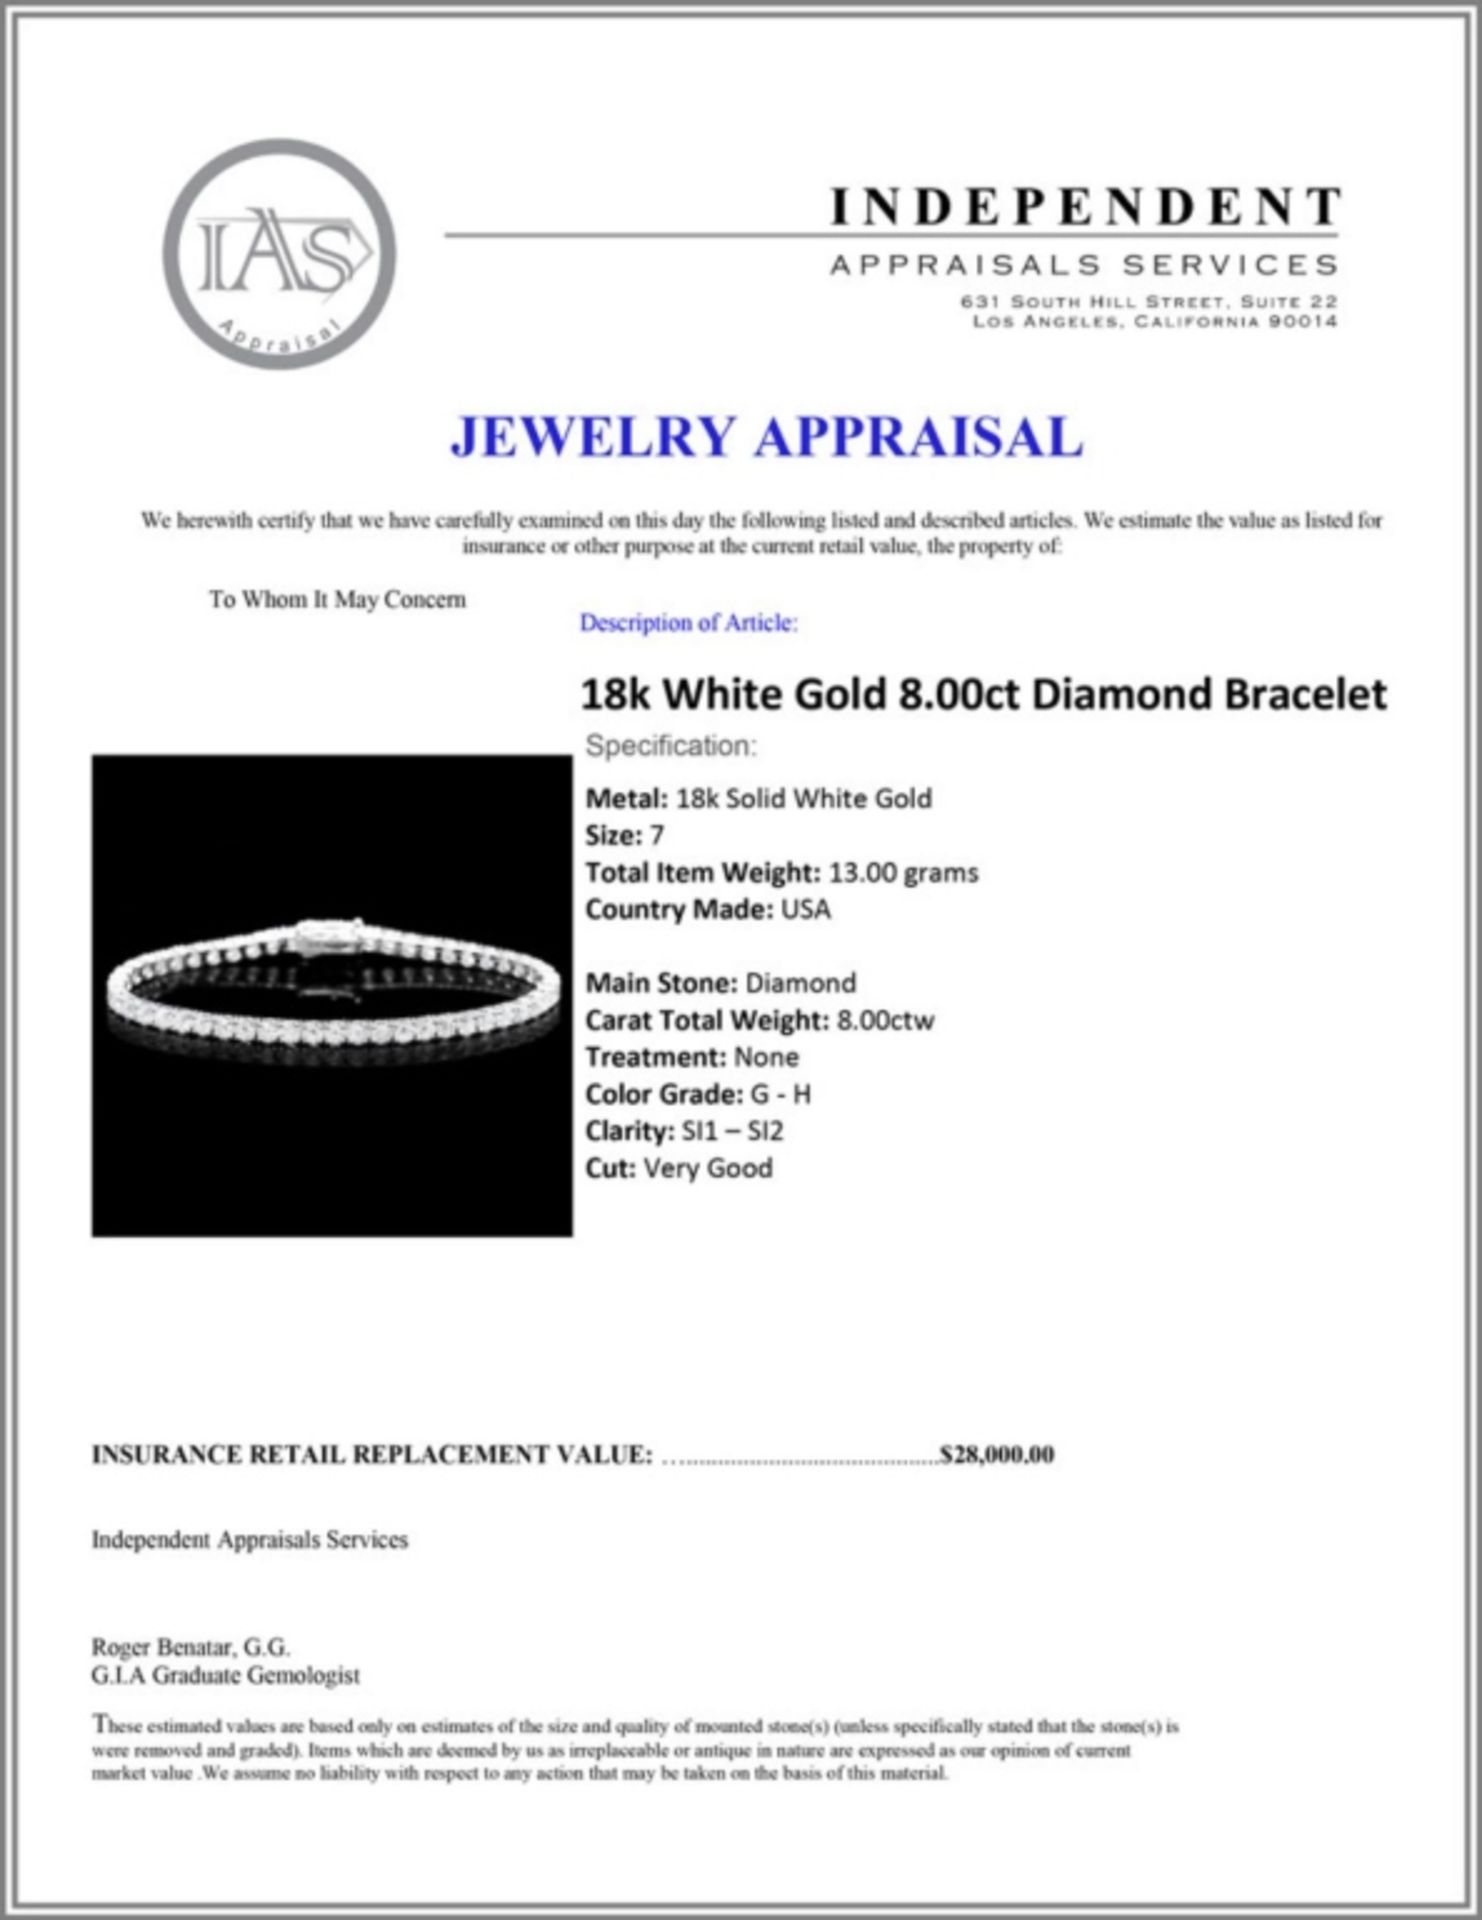 ^18k White Gold 8.00ct Diamond Bracelet - Image 4 of 4